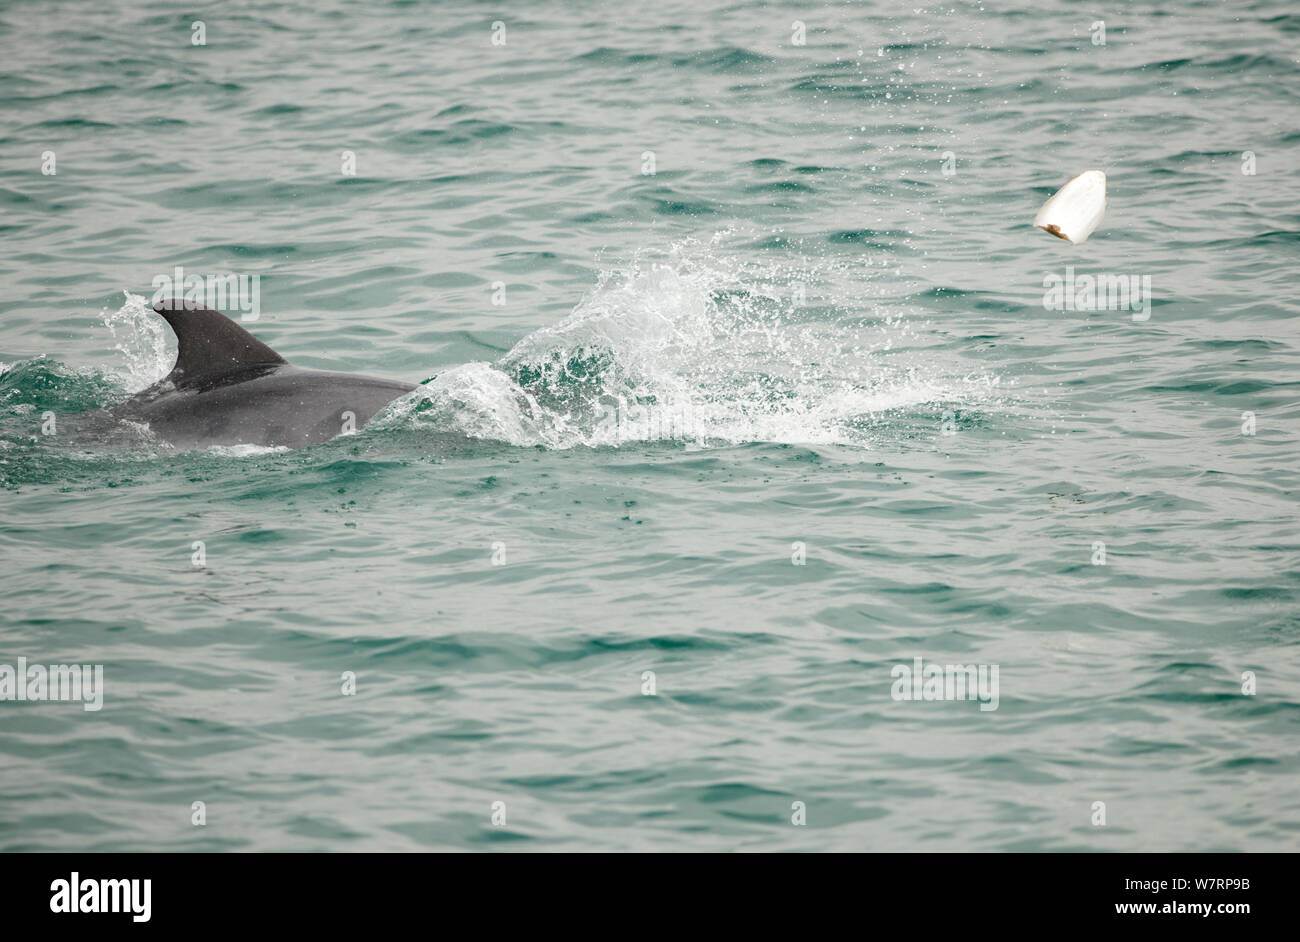 Bottlenose Dolphin (Tursiops truncatus) playing with cuttlefish bone, Sado Estuary, Portugal Stock Photo